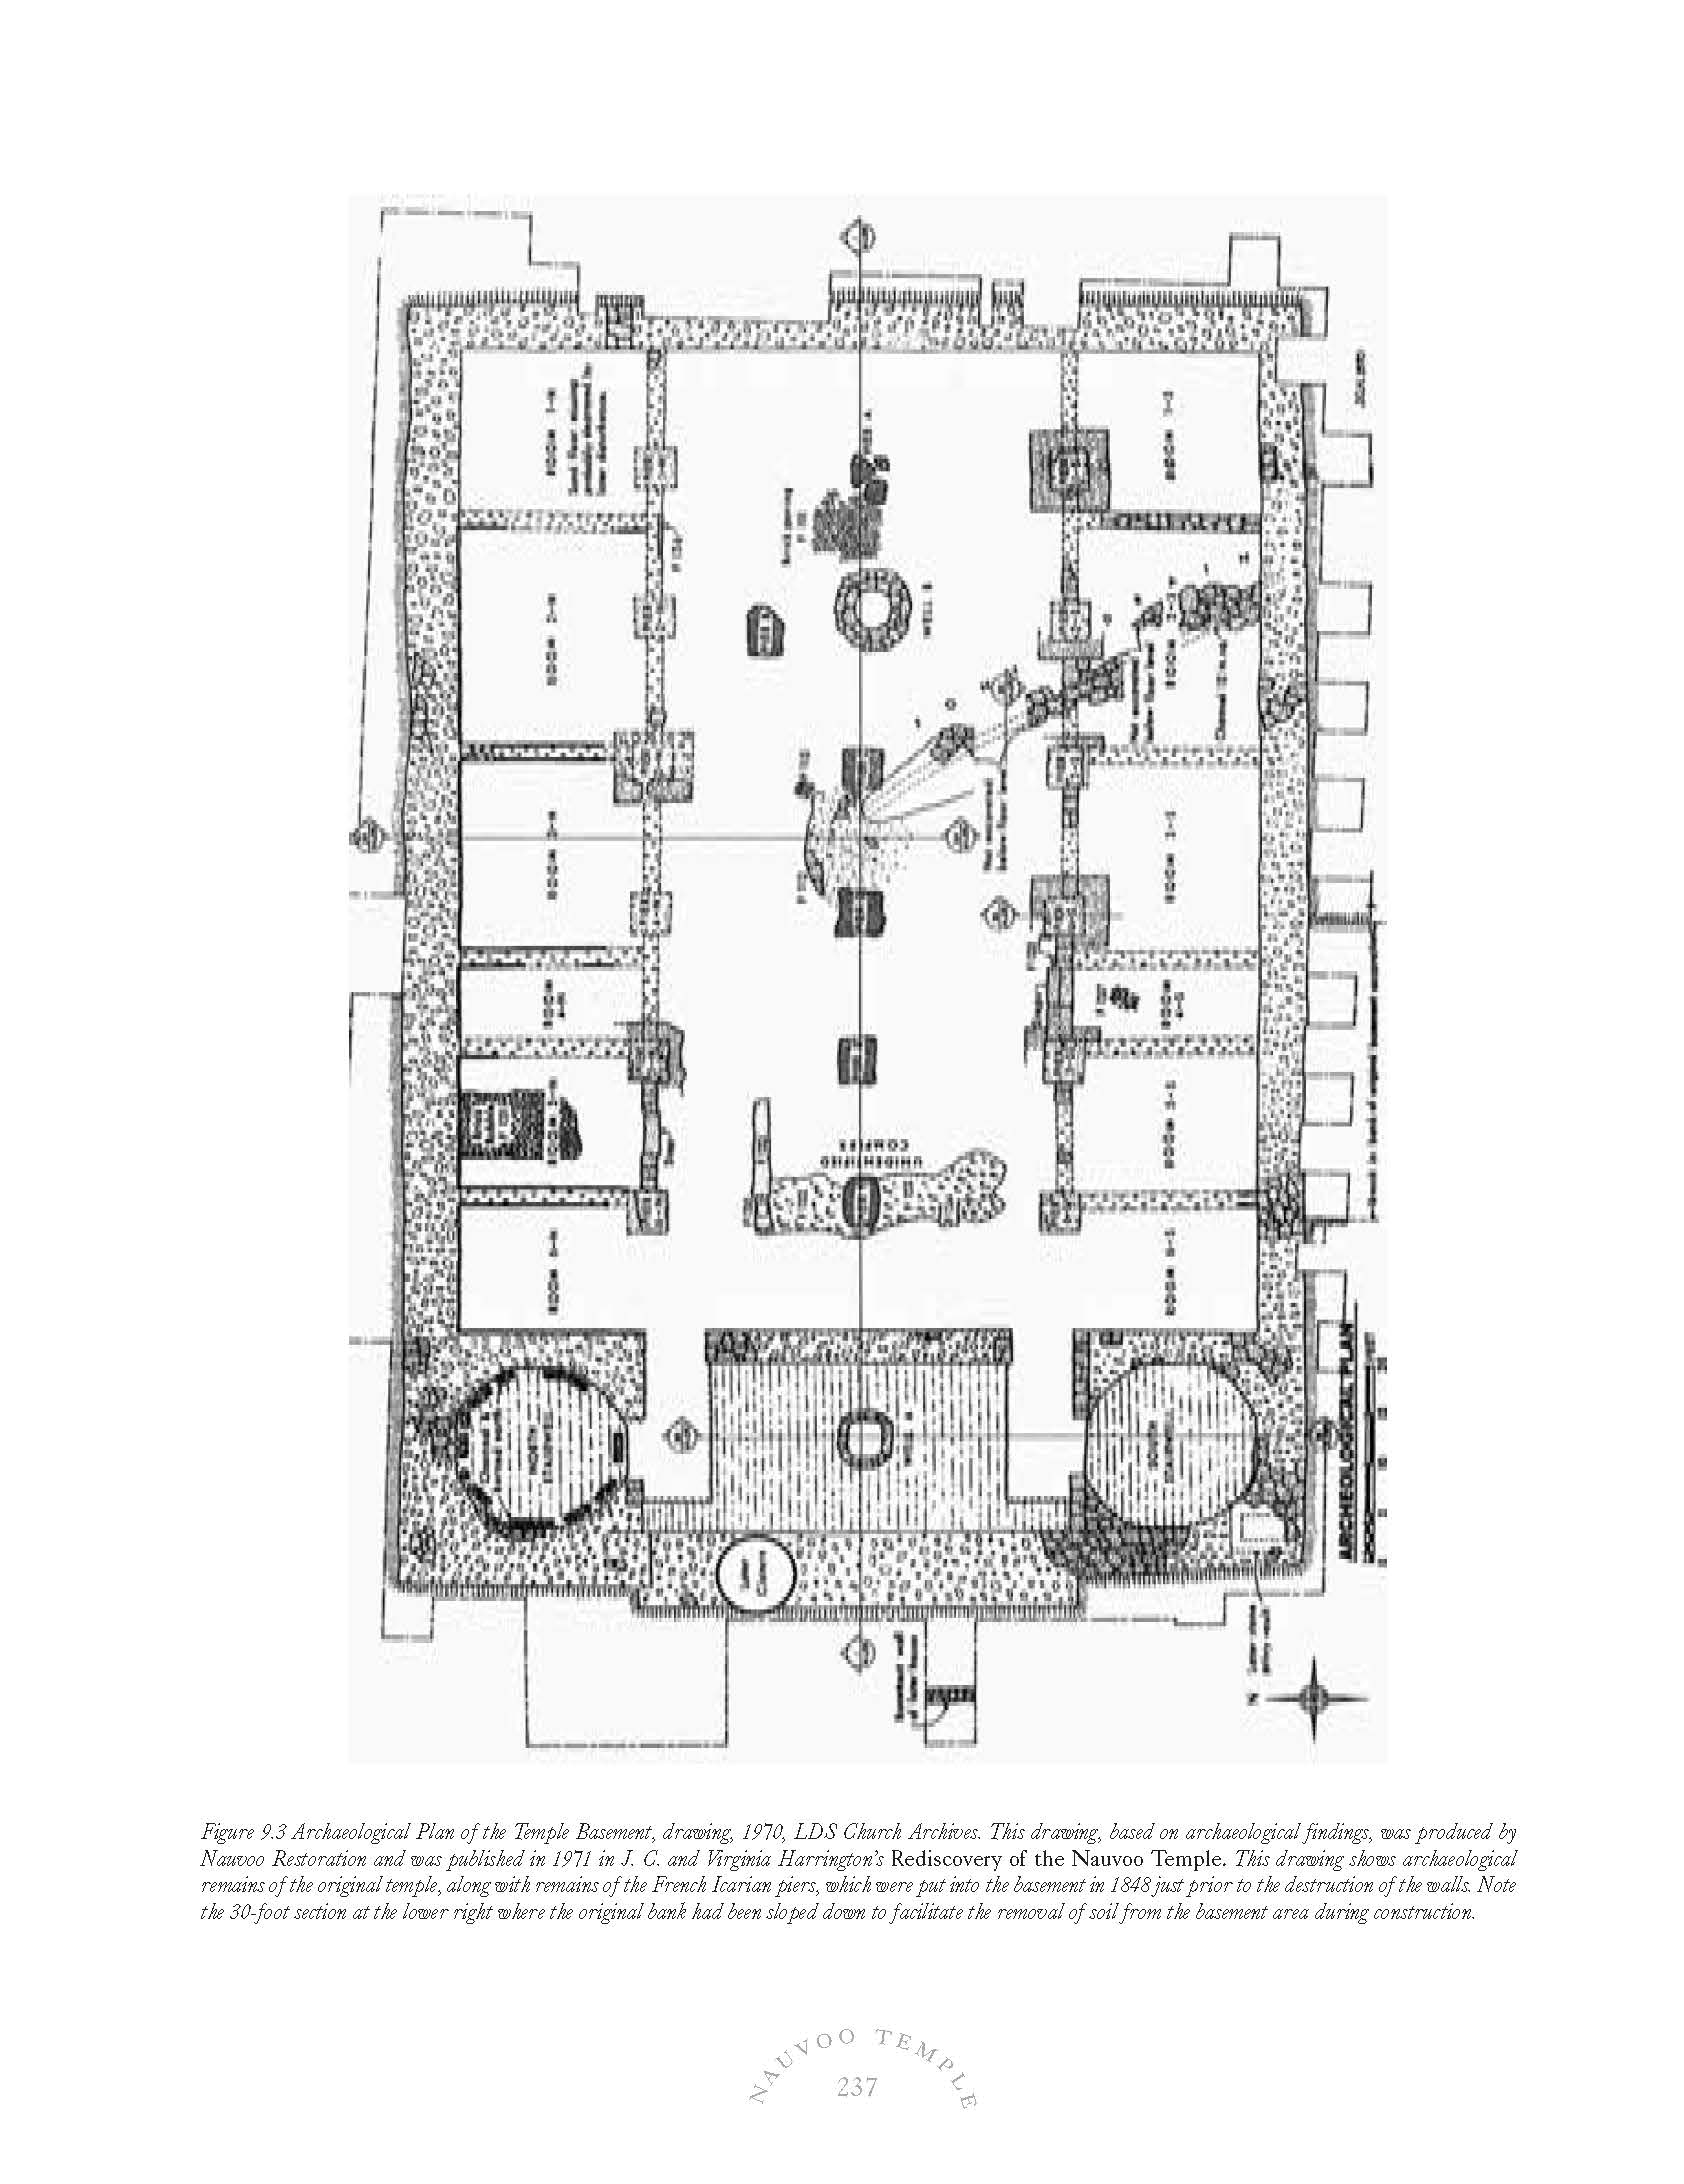 Plan of Temple Basement